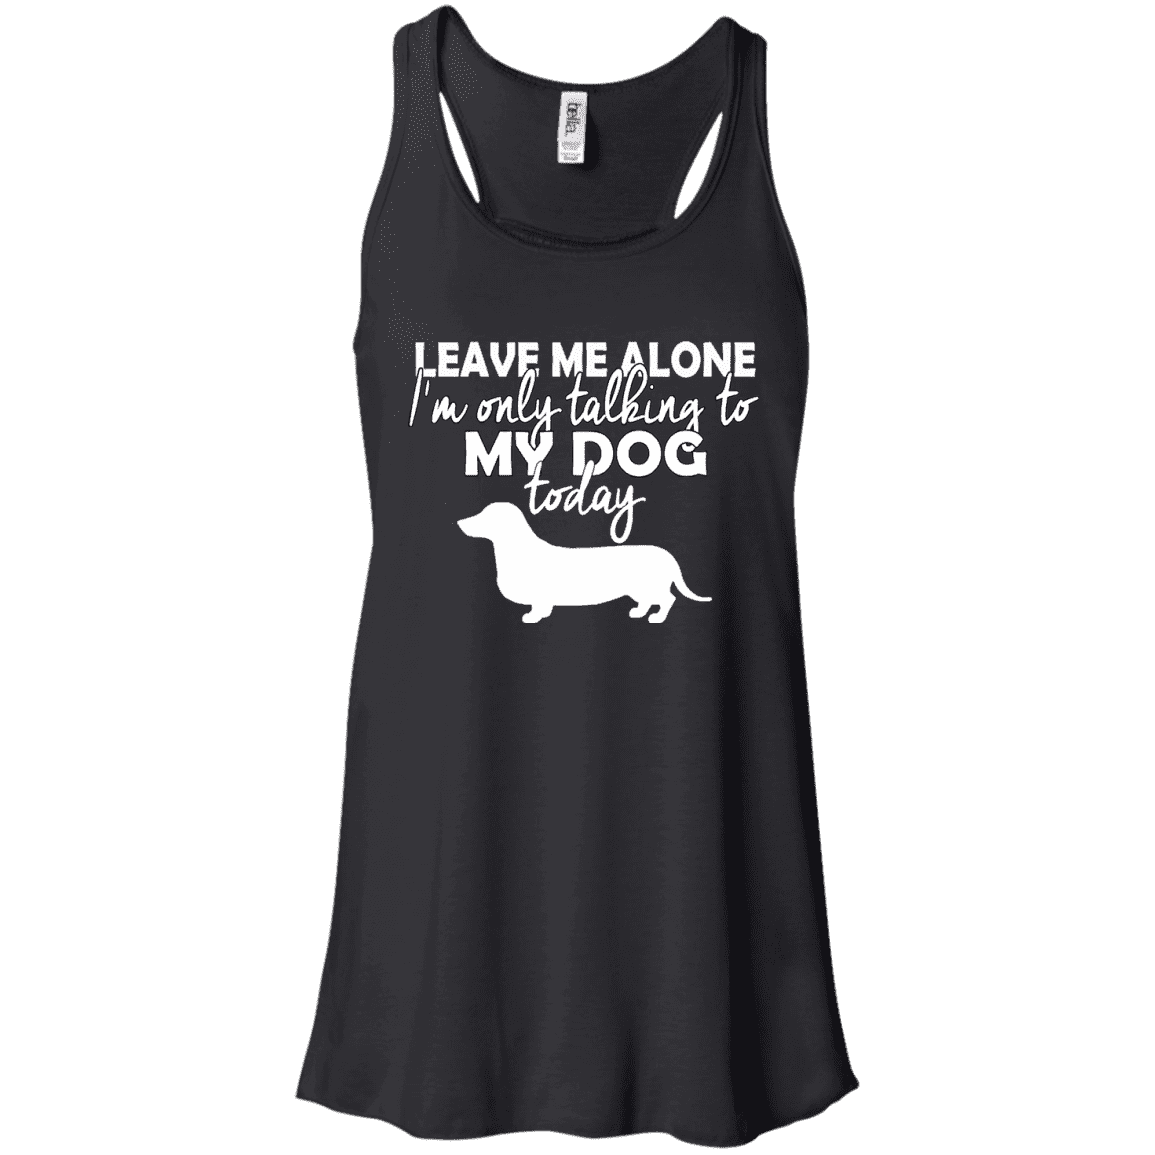 Leave Me Alone Duchshund Ladies Tee - STUDIO 11 COUTURE